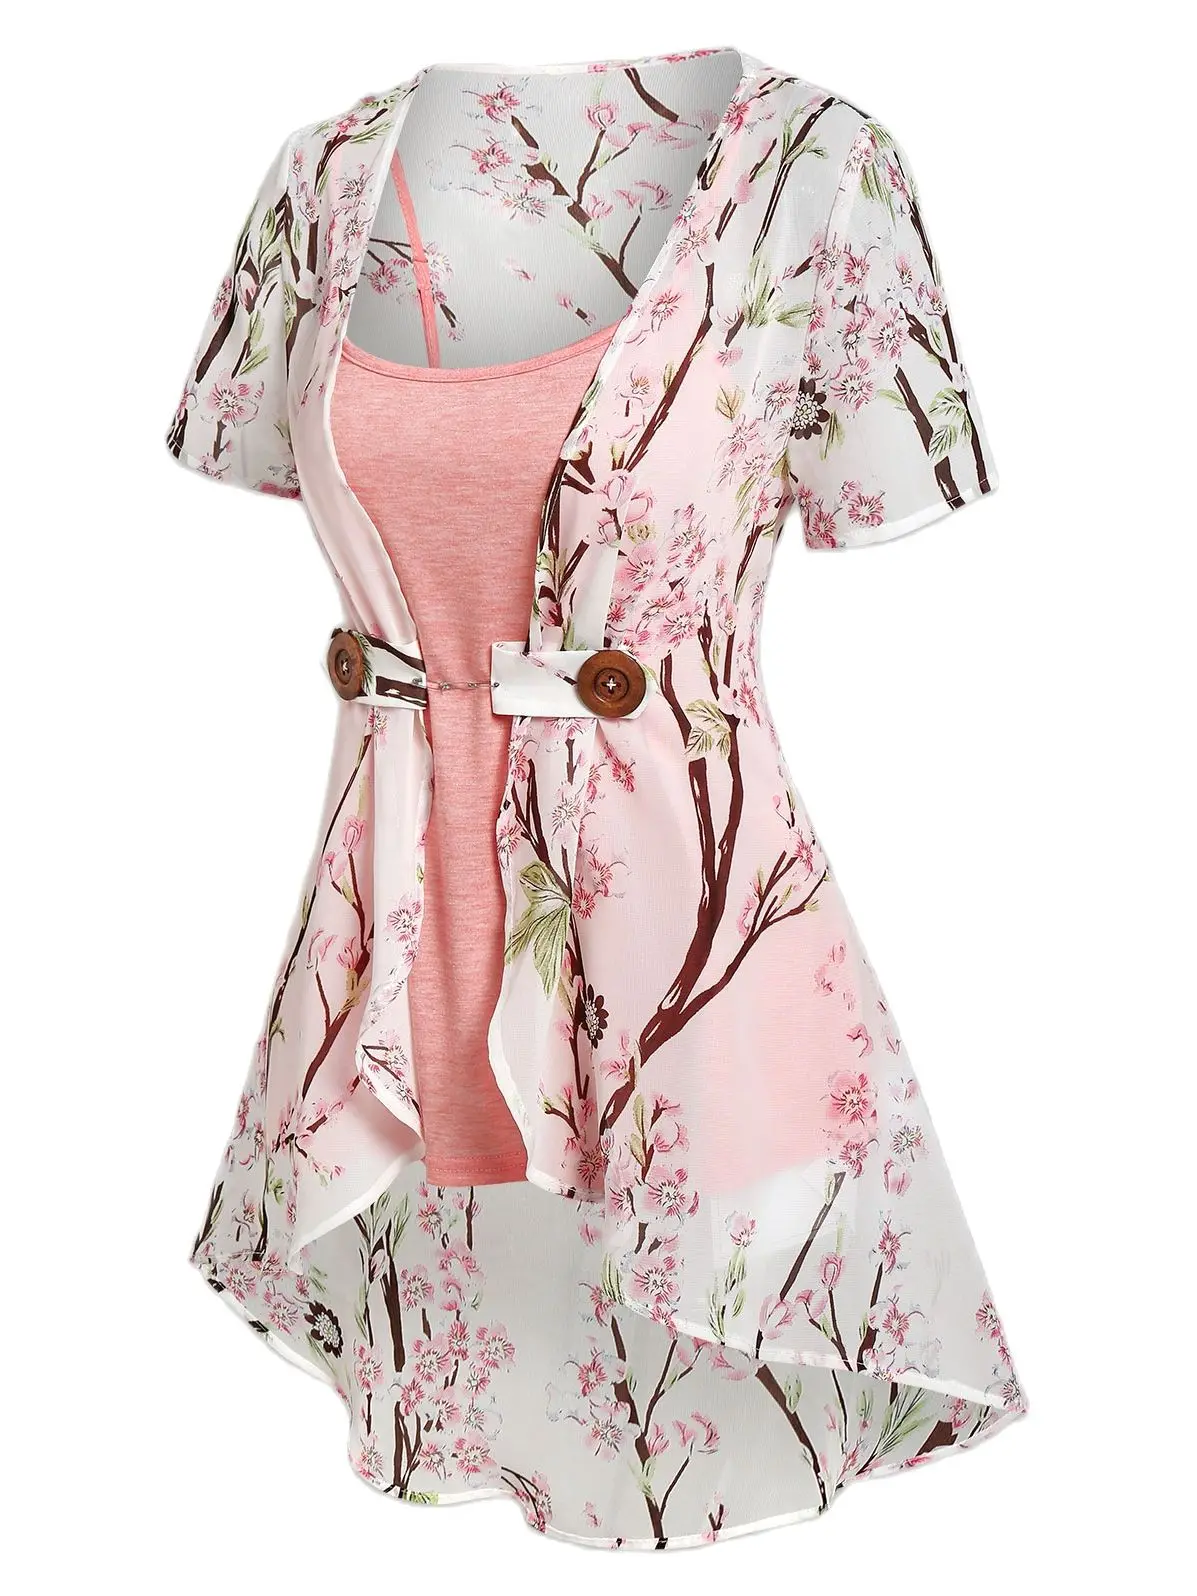 

Dressfo Two-Piece Set Top Chiffon Irregular Floral Print Summer Vacation Asymmetric Top Twinset Allover Peach Blossom Shirts